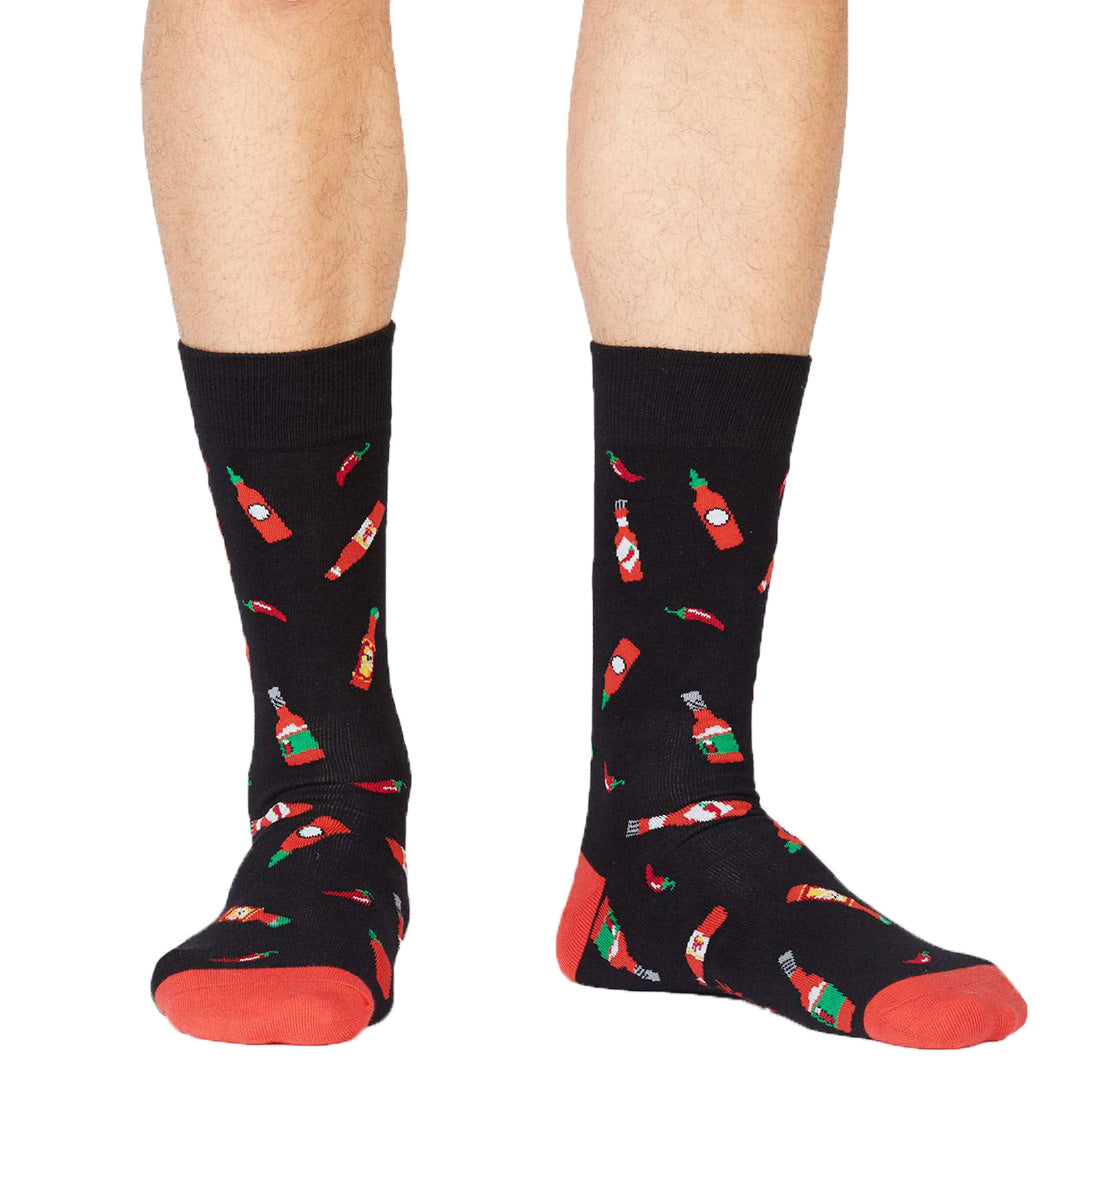 SOCK it to me Men's Crew Socks (mef0247),Hot Sauce - Hot Sauce,One Size